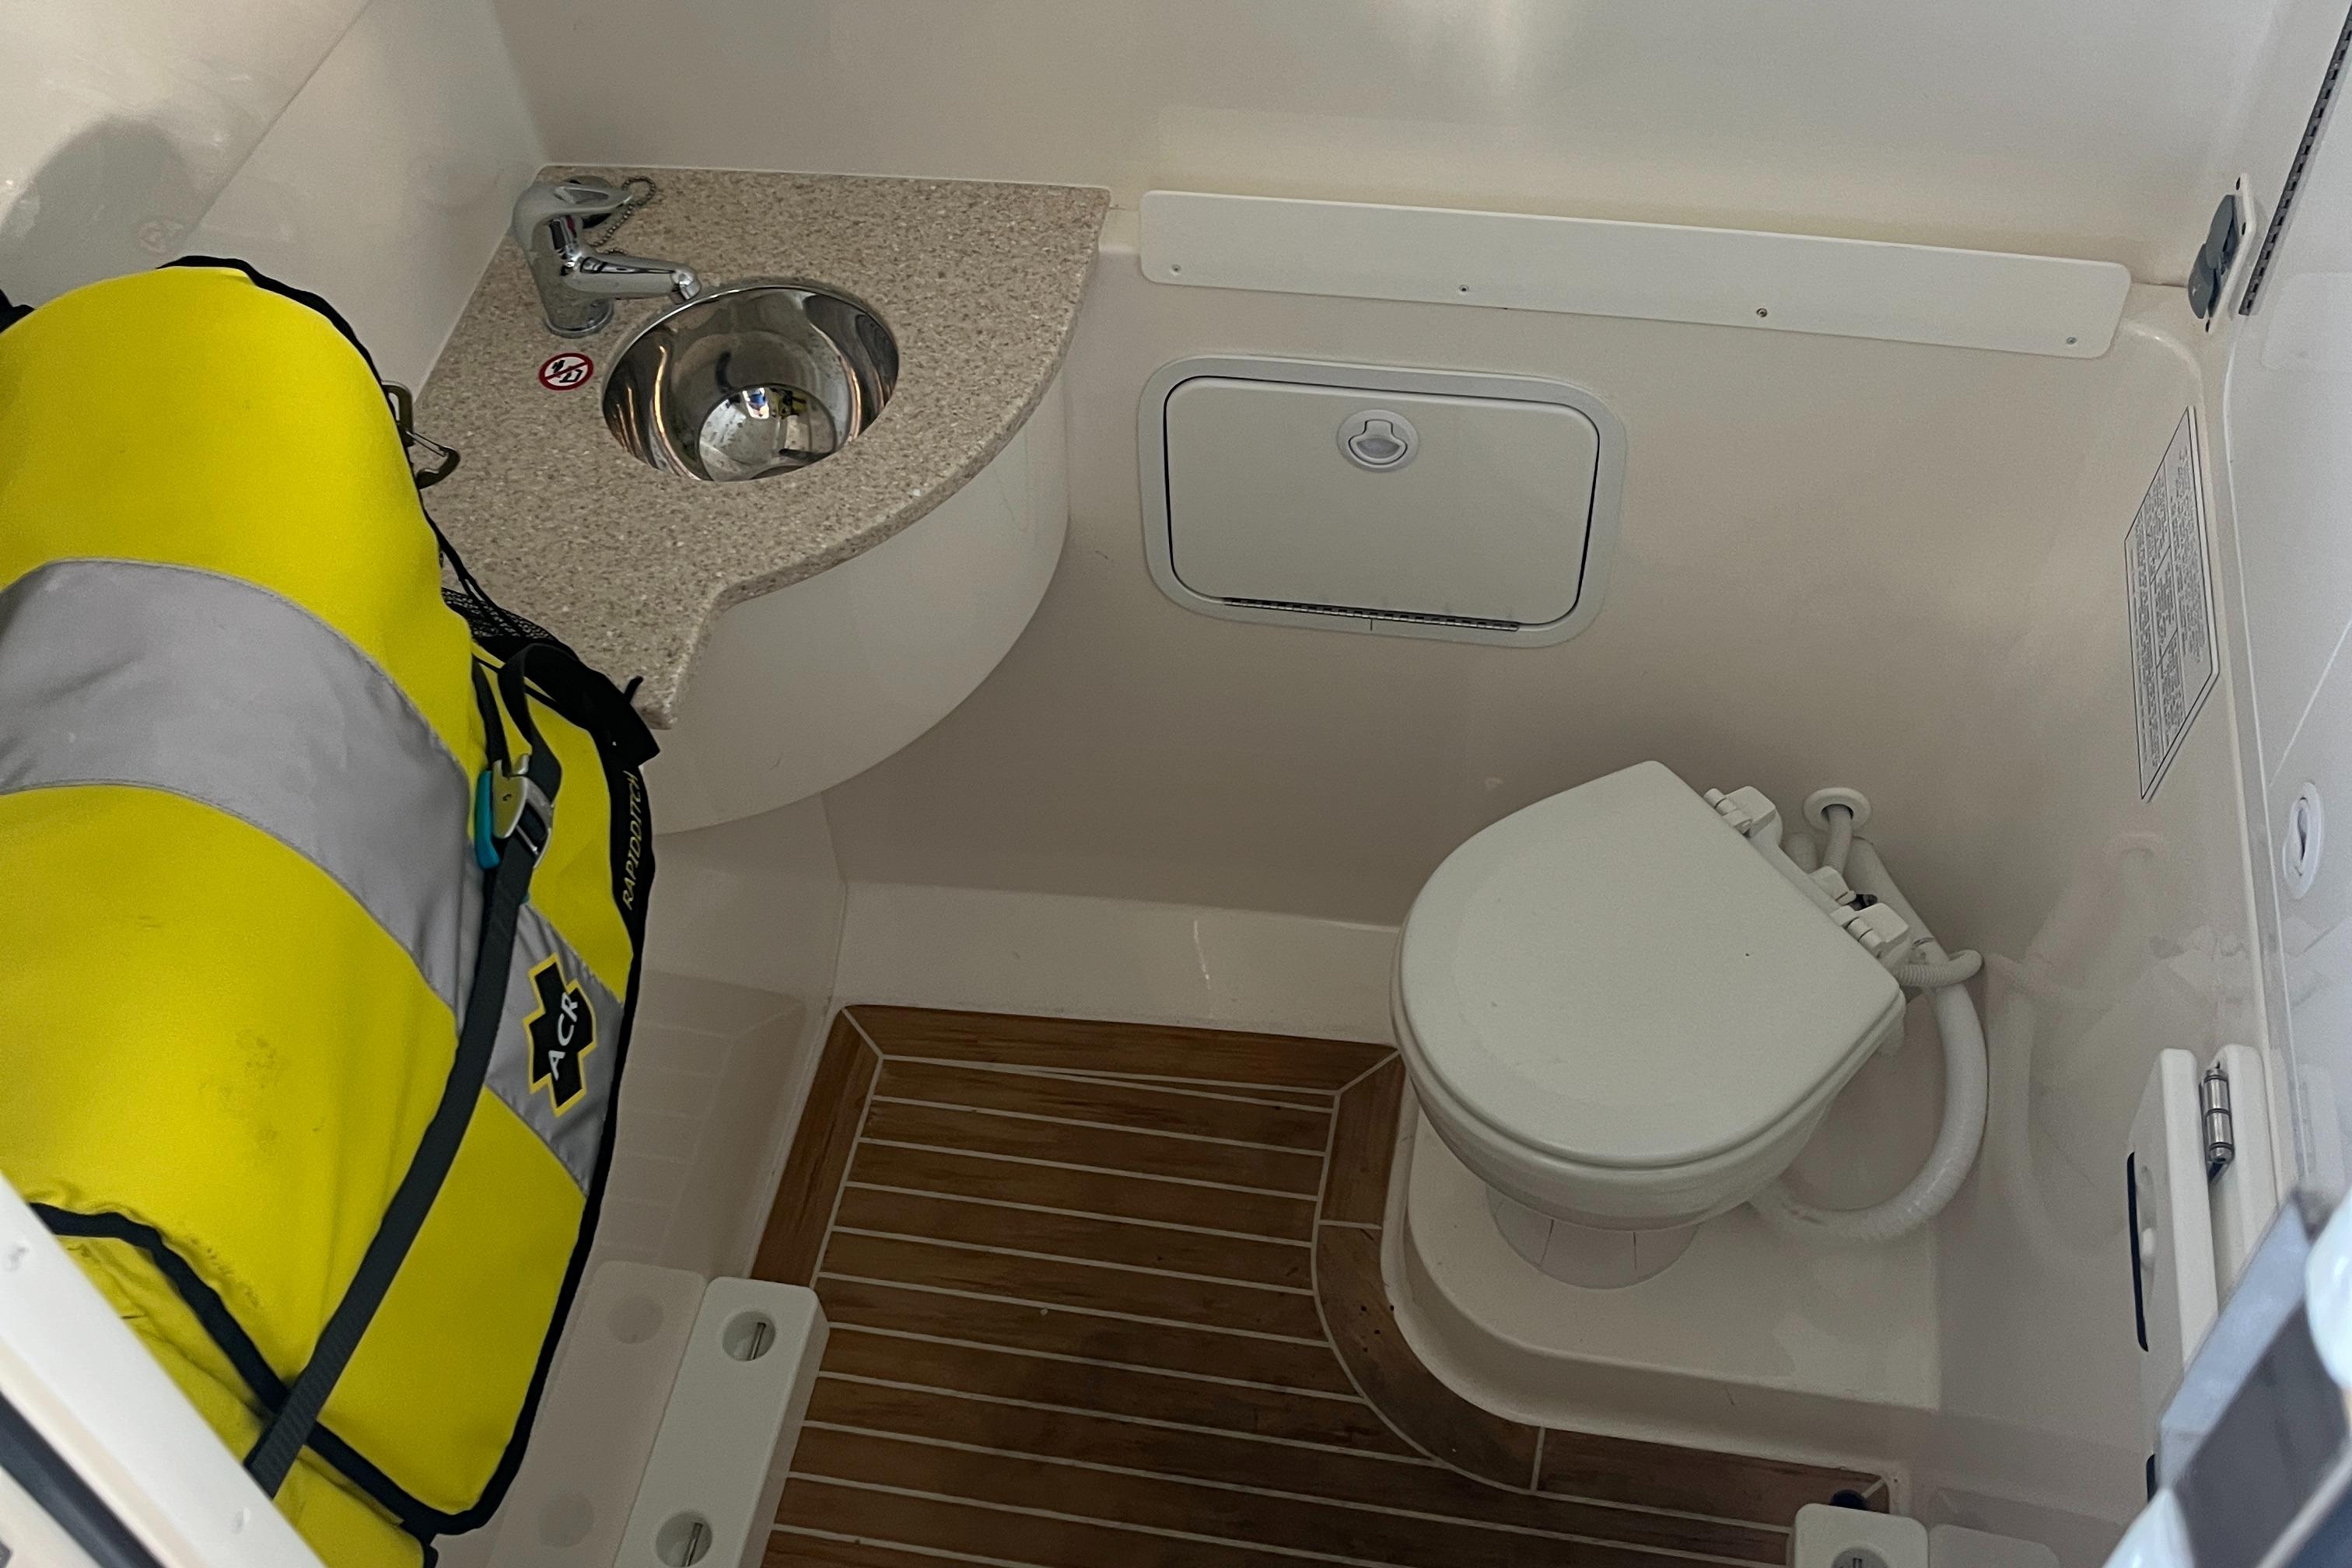 2017 Regulator 31, Helm Master, FLIR, 22 inch Garmin, Electric Fresh water flushing toilet